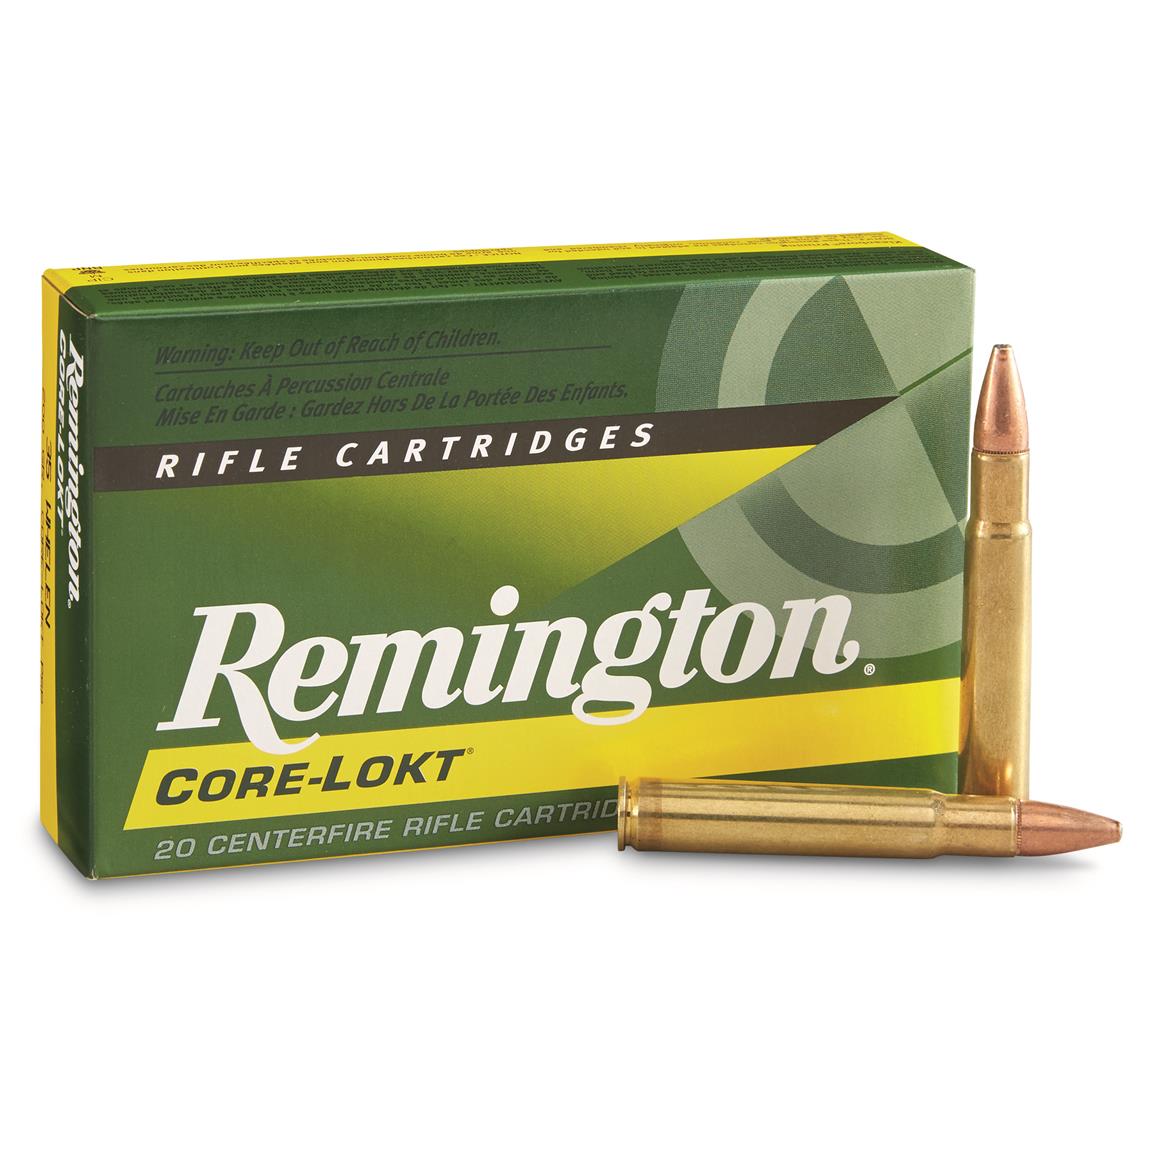 Remington .35 Whelen, PSP Core-Lokt, 200 Grain, 20 Rounds - 95095, .35 Whelen Ammo at Sportsman's Guide